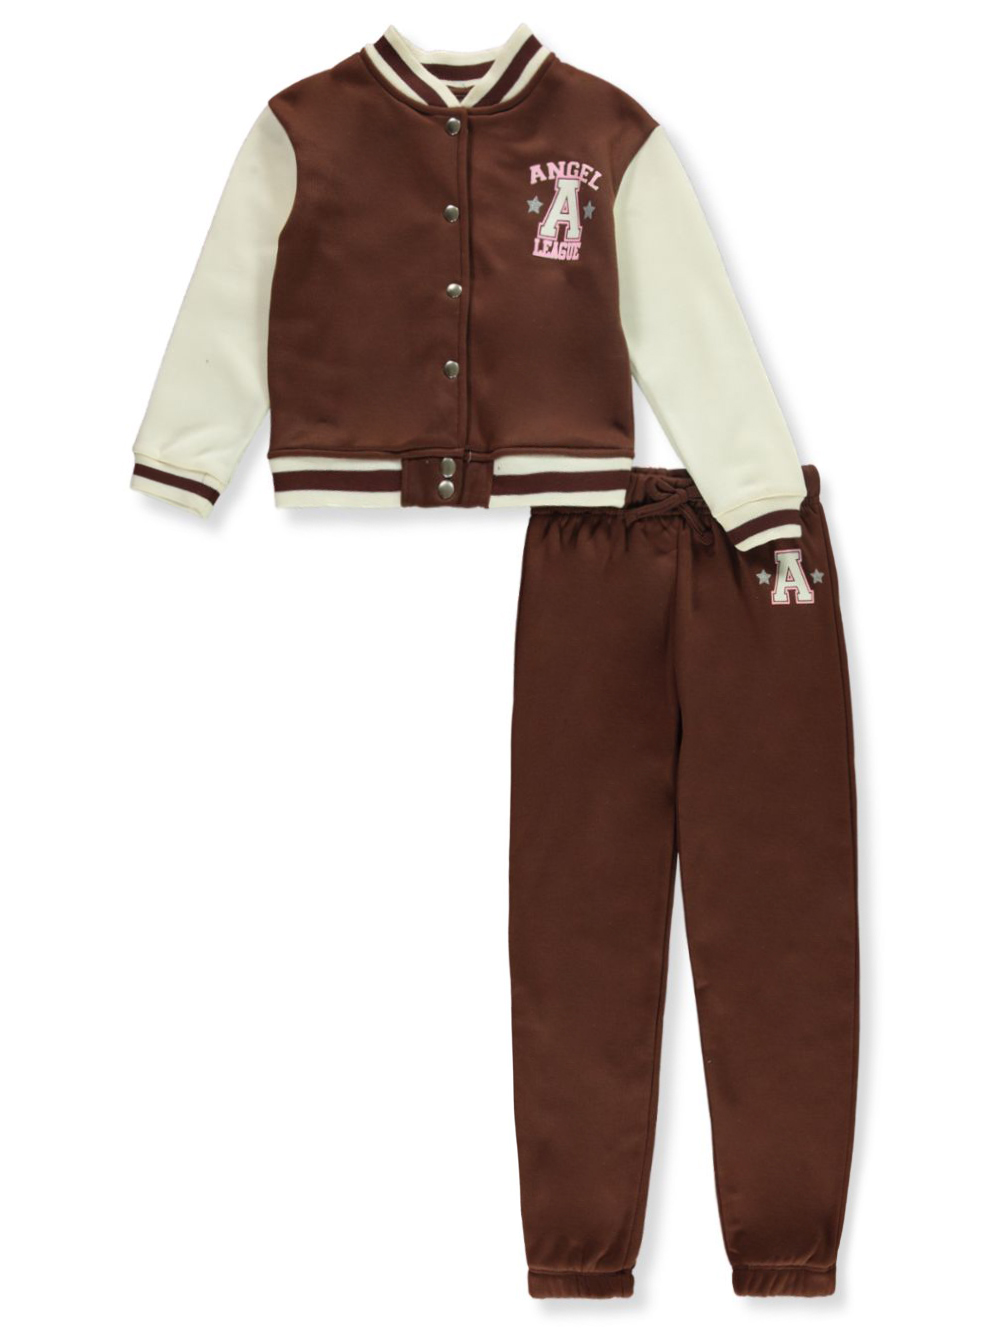 Star Ride Girls' 2-Piece Varsity Jacket Set Outfit, Brown/Cream